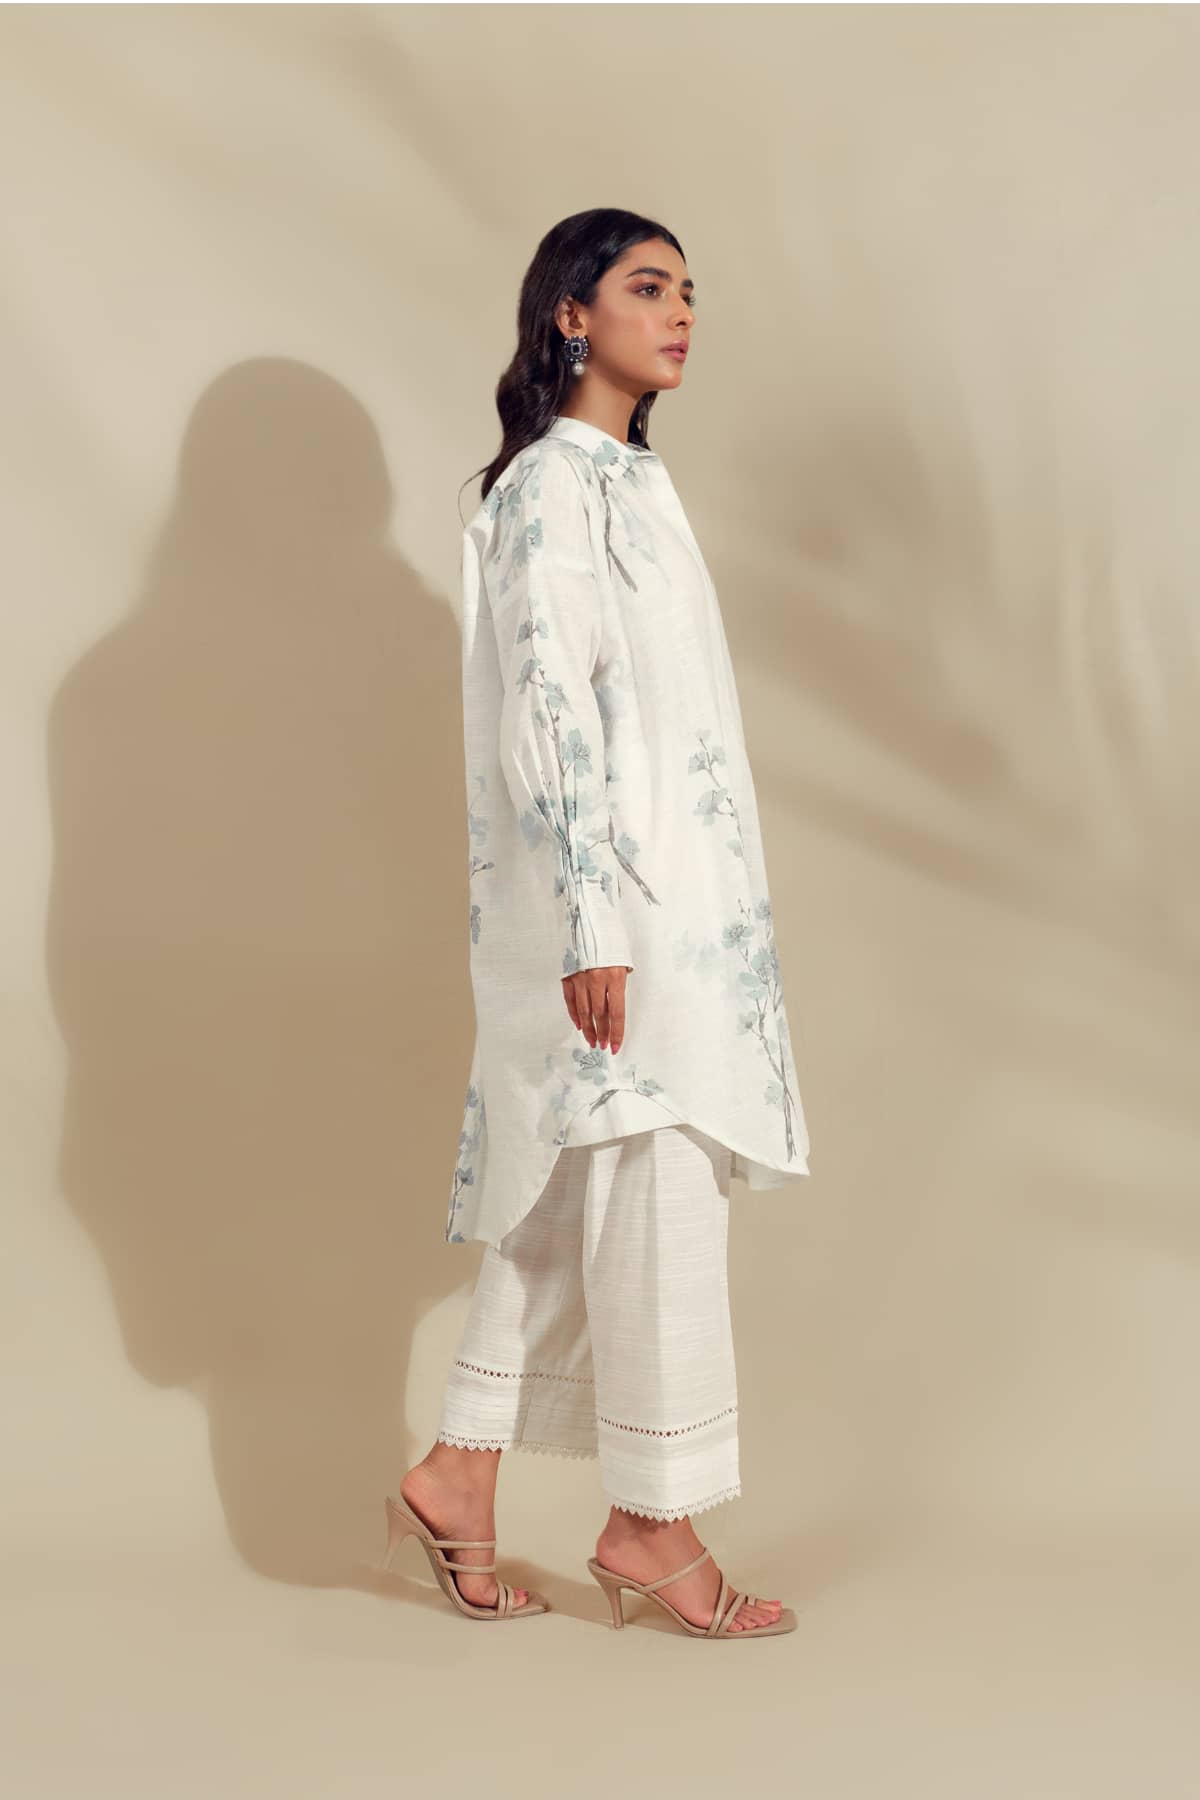 Standing Model wearing Azure a printed cotton  shirt 